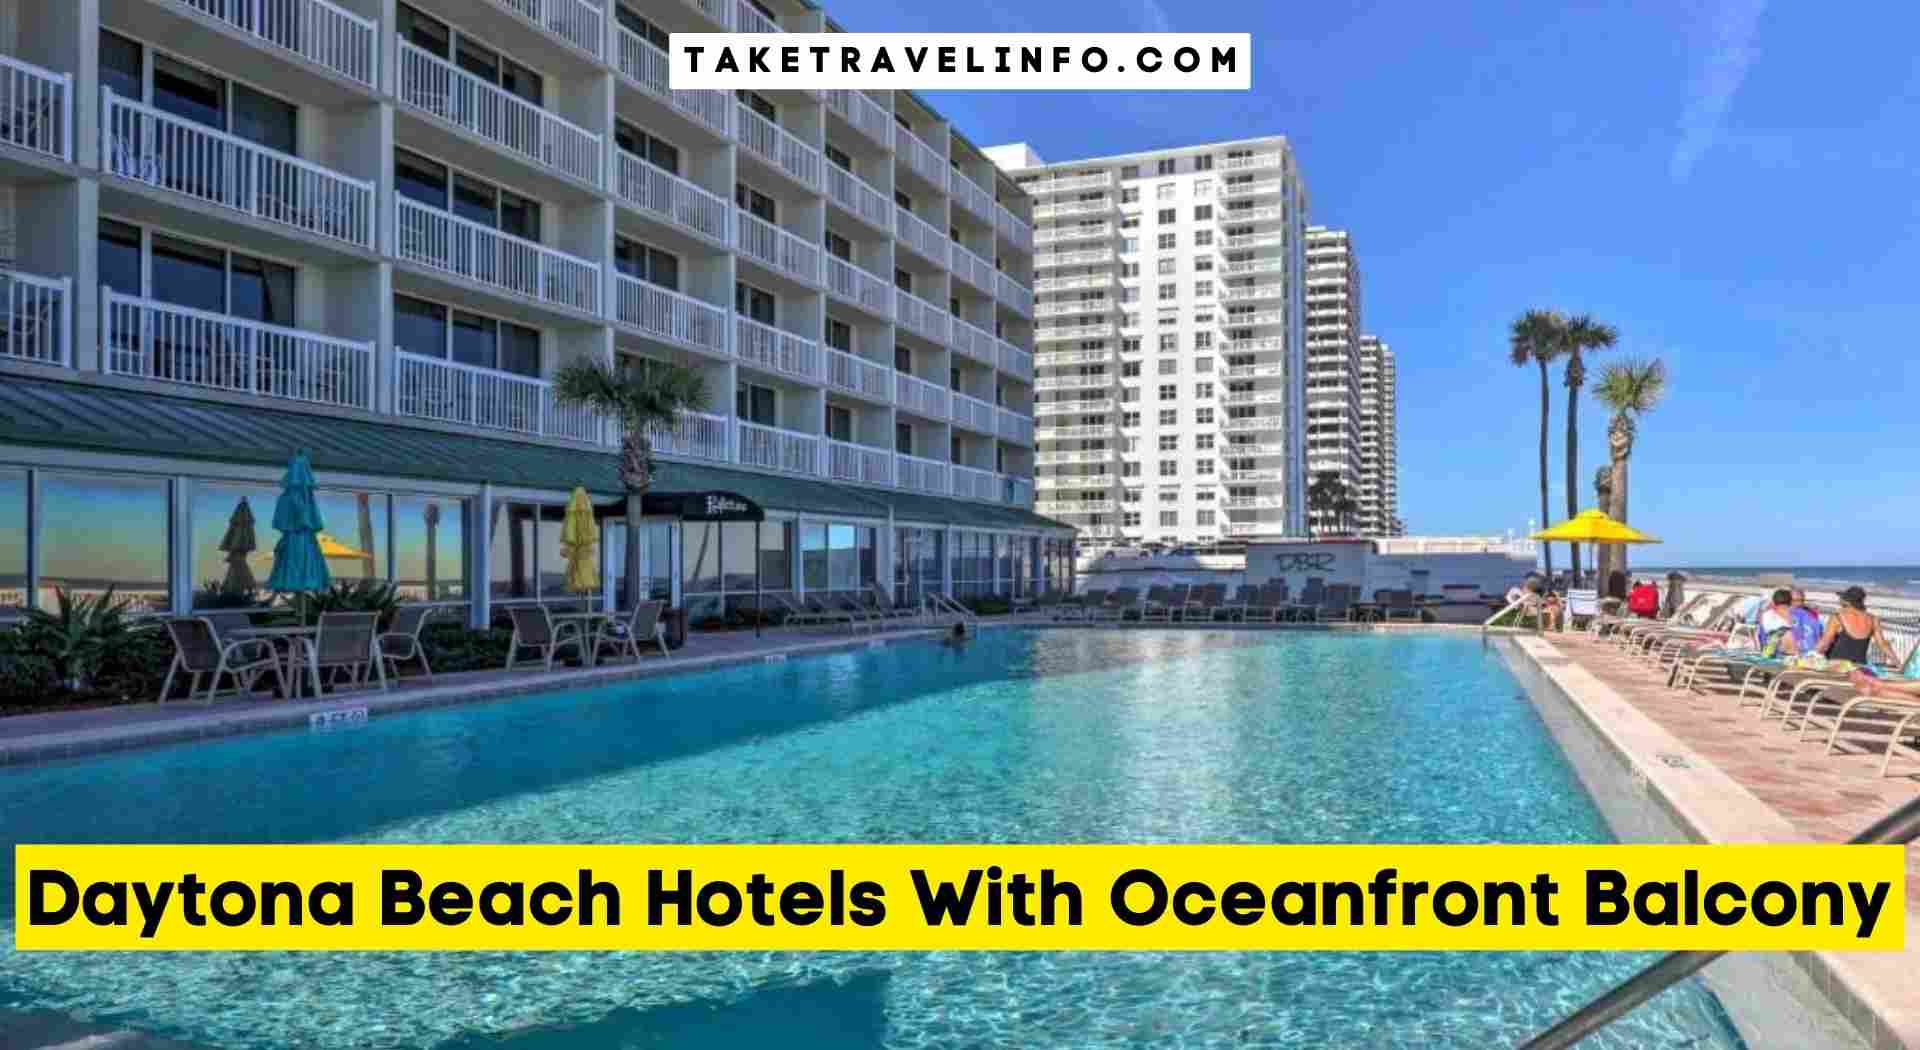 Daytona Beach Hotels With Oceanfront Balcony